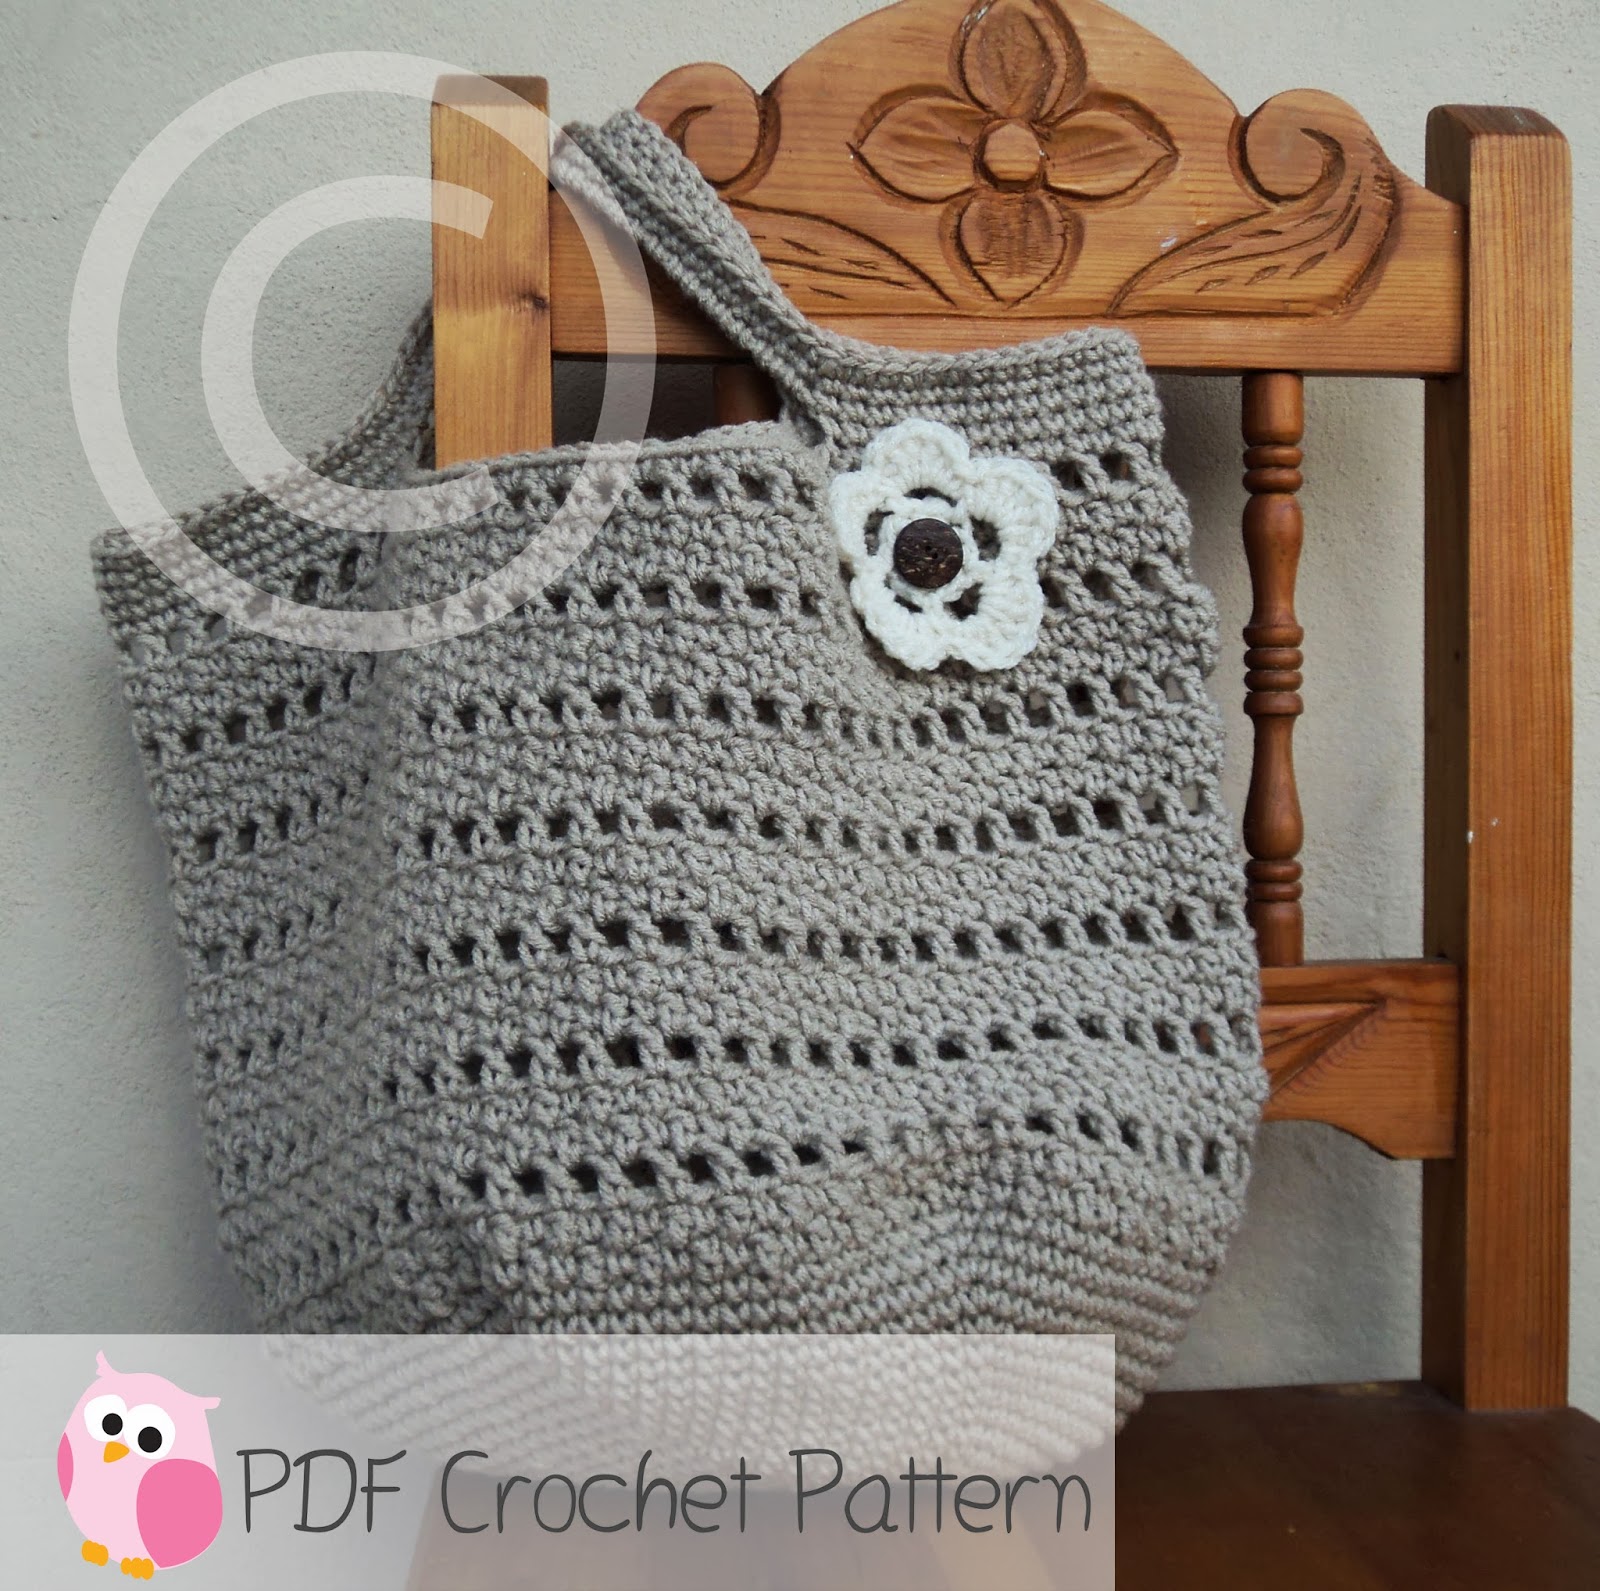 Cute Little Crafts: Crochet Pattern: The perfect market bag